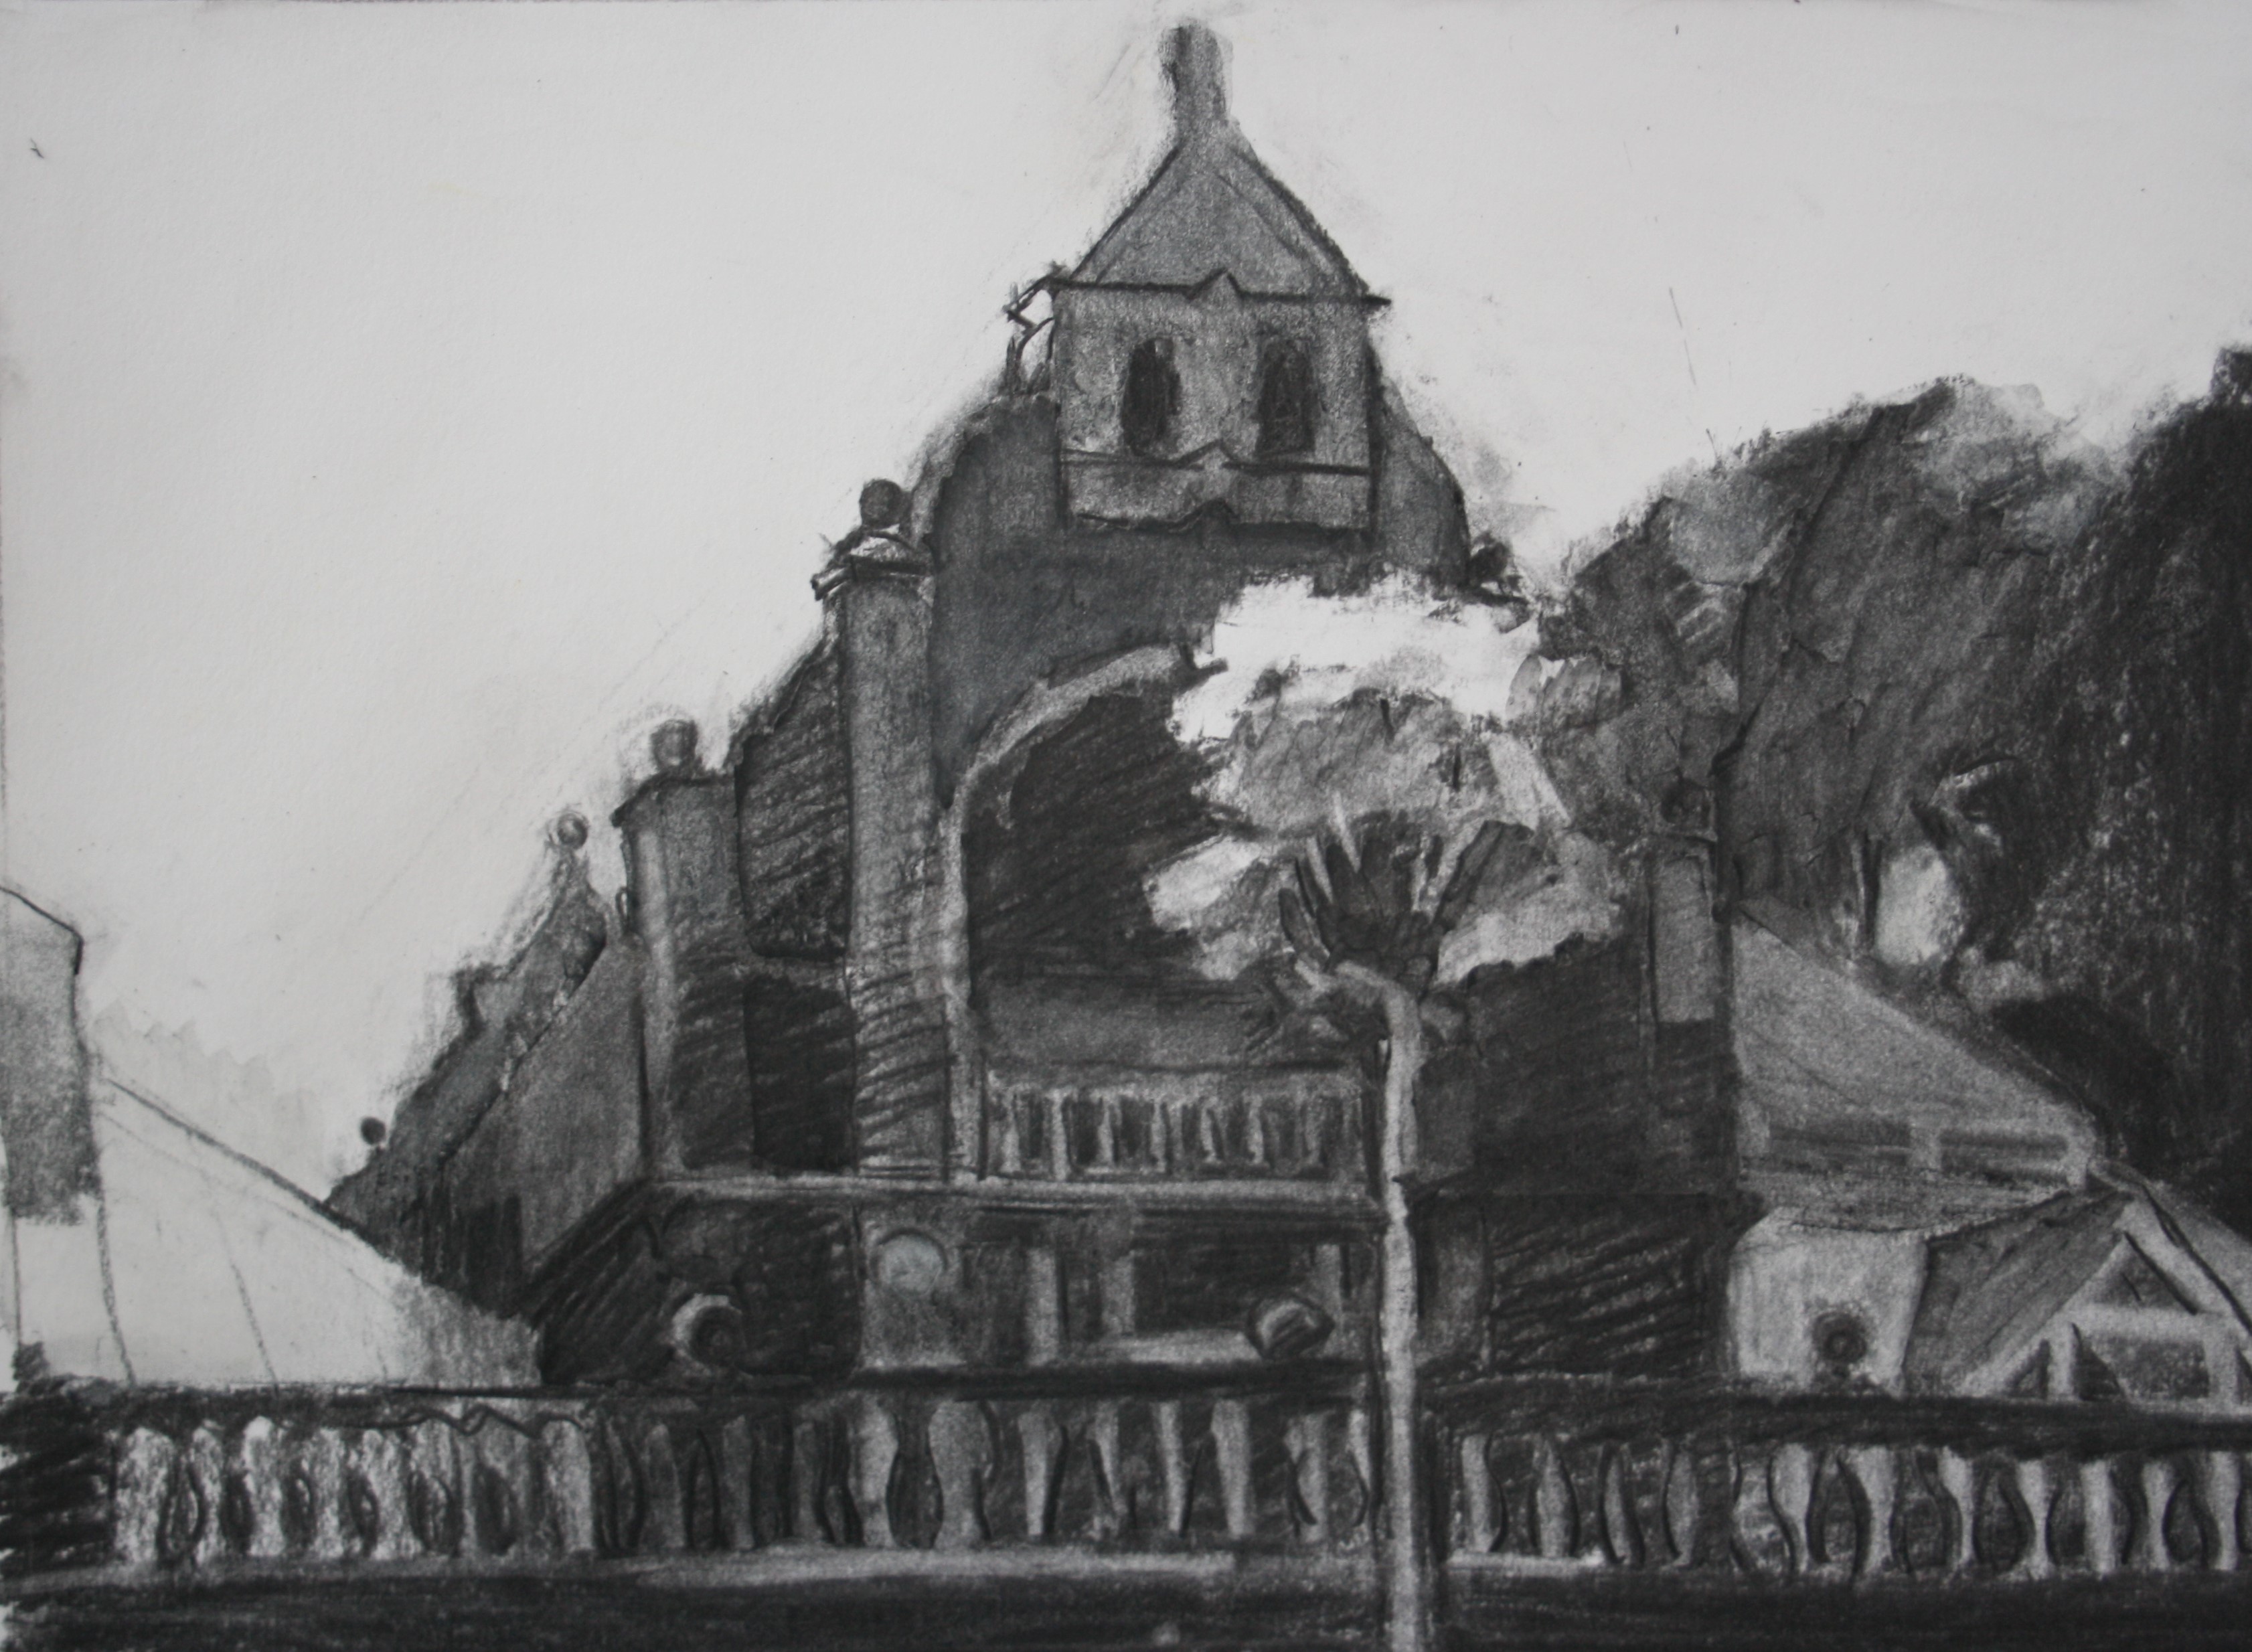 Sebastian Aplin, Belle Vue Park pavillion, Charcoal on paper, 42 x 52 cm (including frame)